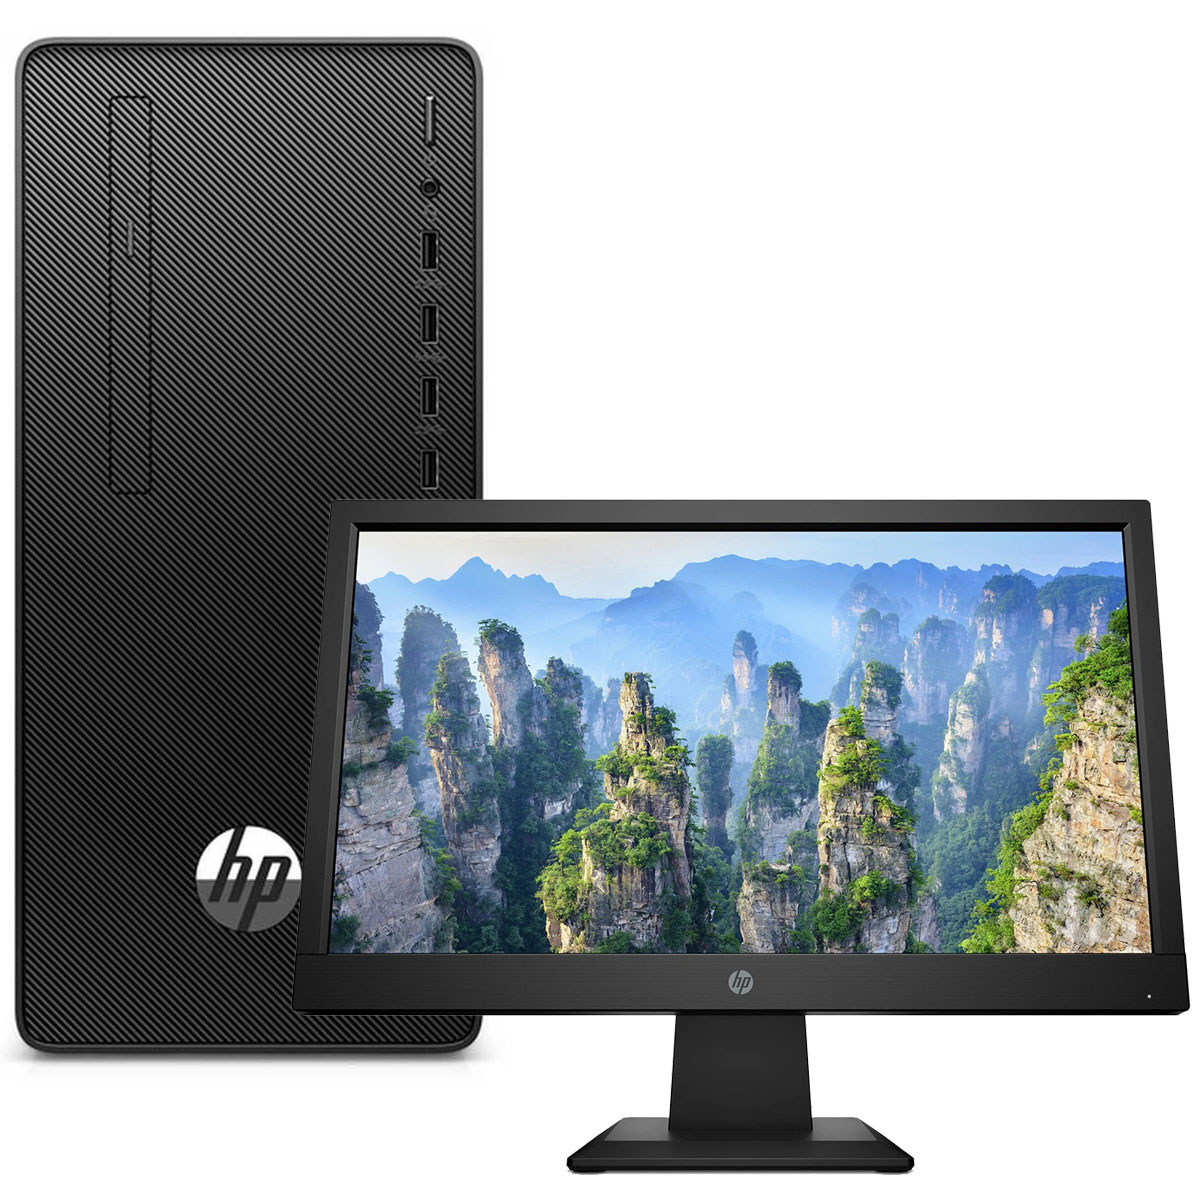 HP 290 G4 MT Intel Core i5 10th Gen 3.1GHz 4GB RAM 1TB HDD + 21.5 Inches HD Display